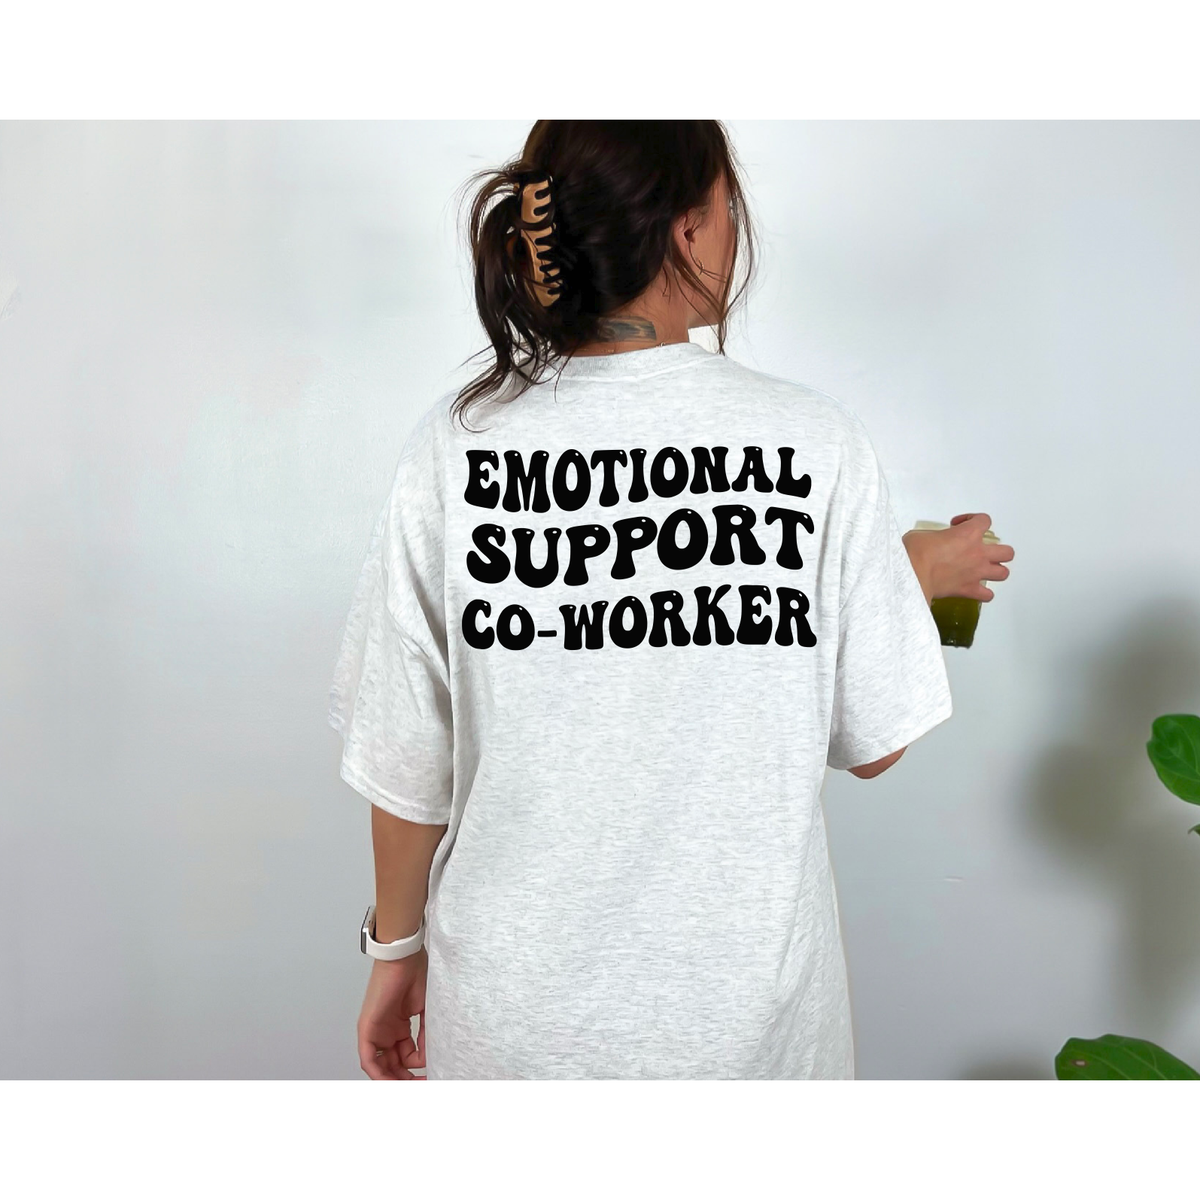 Emotional Support Co-Worker Tee or Sweatshirt